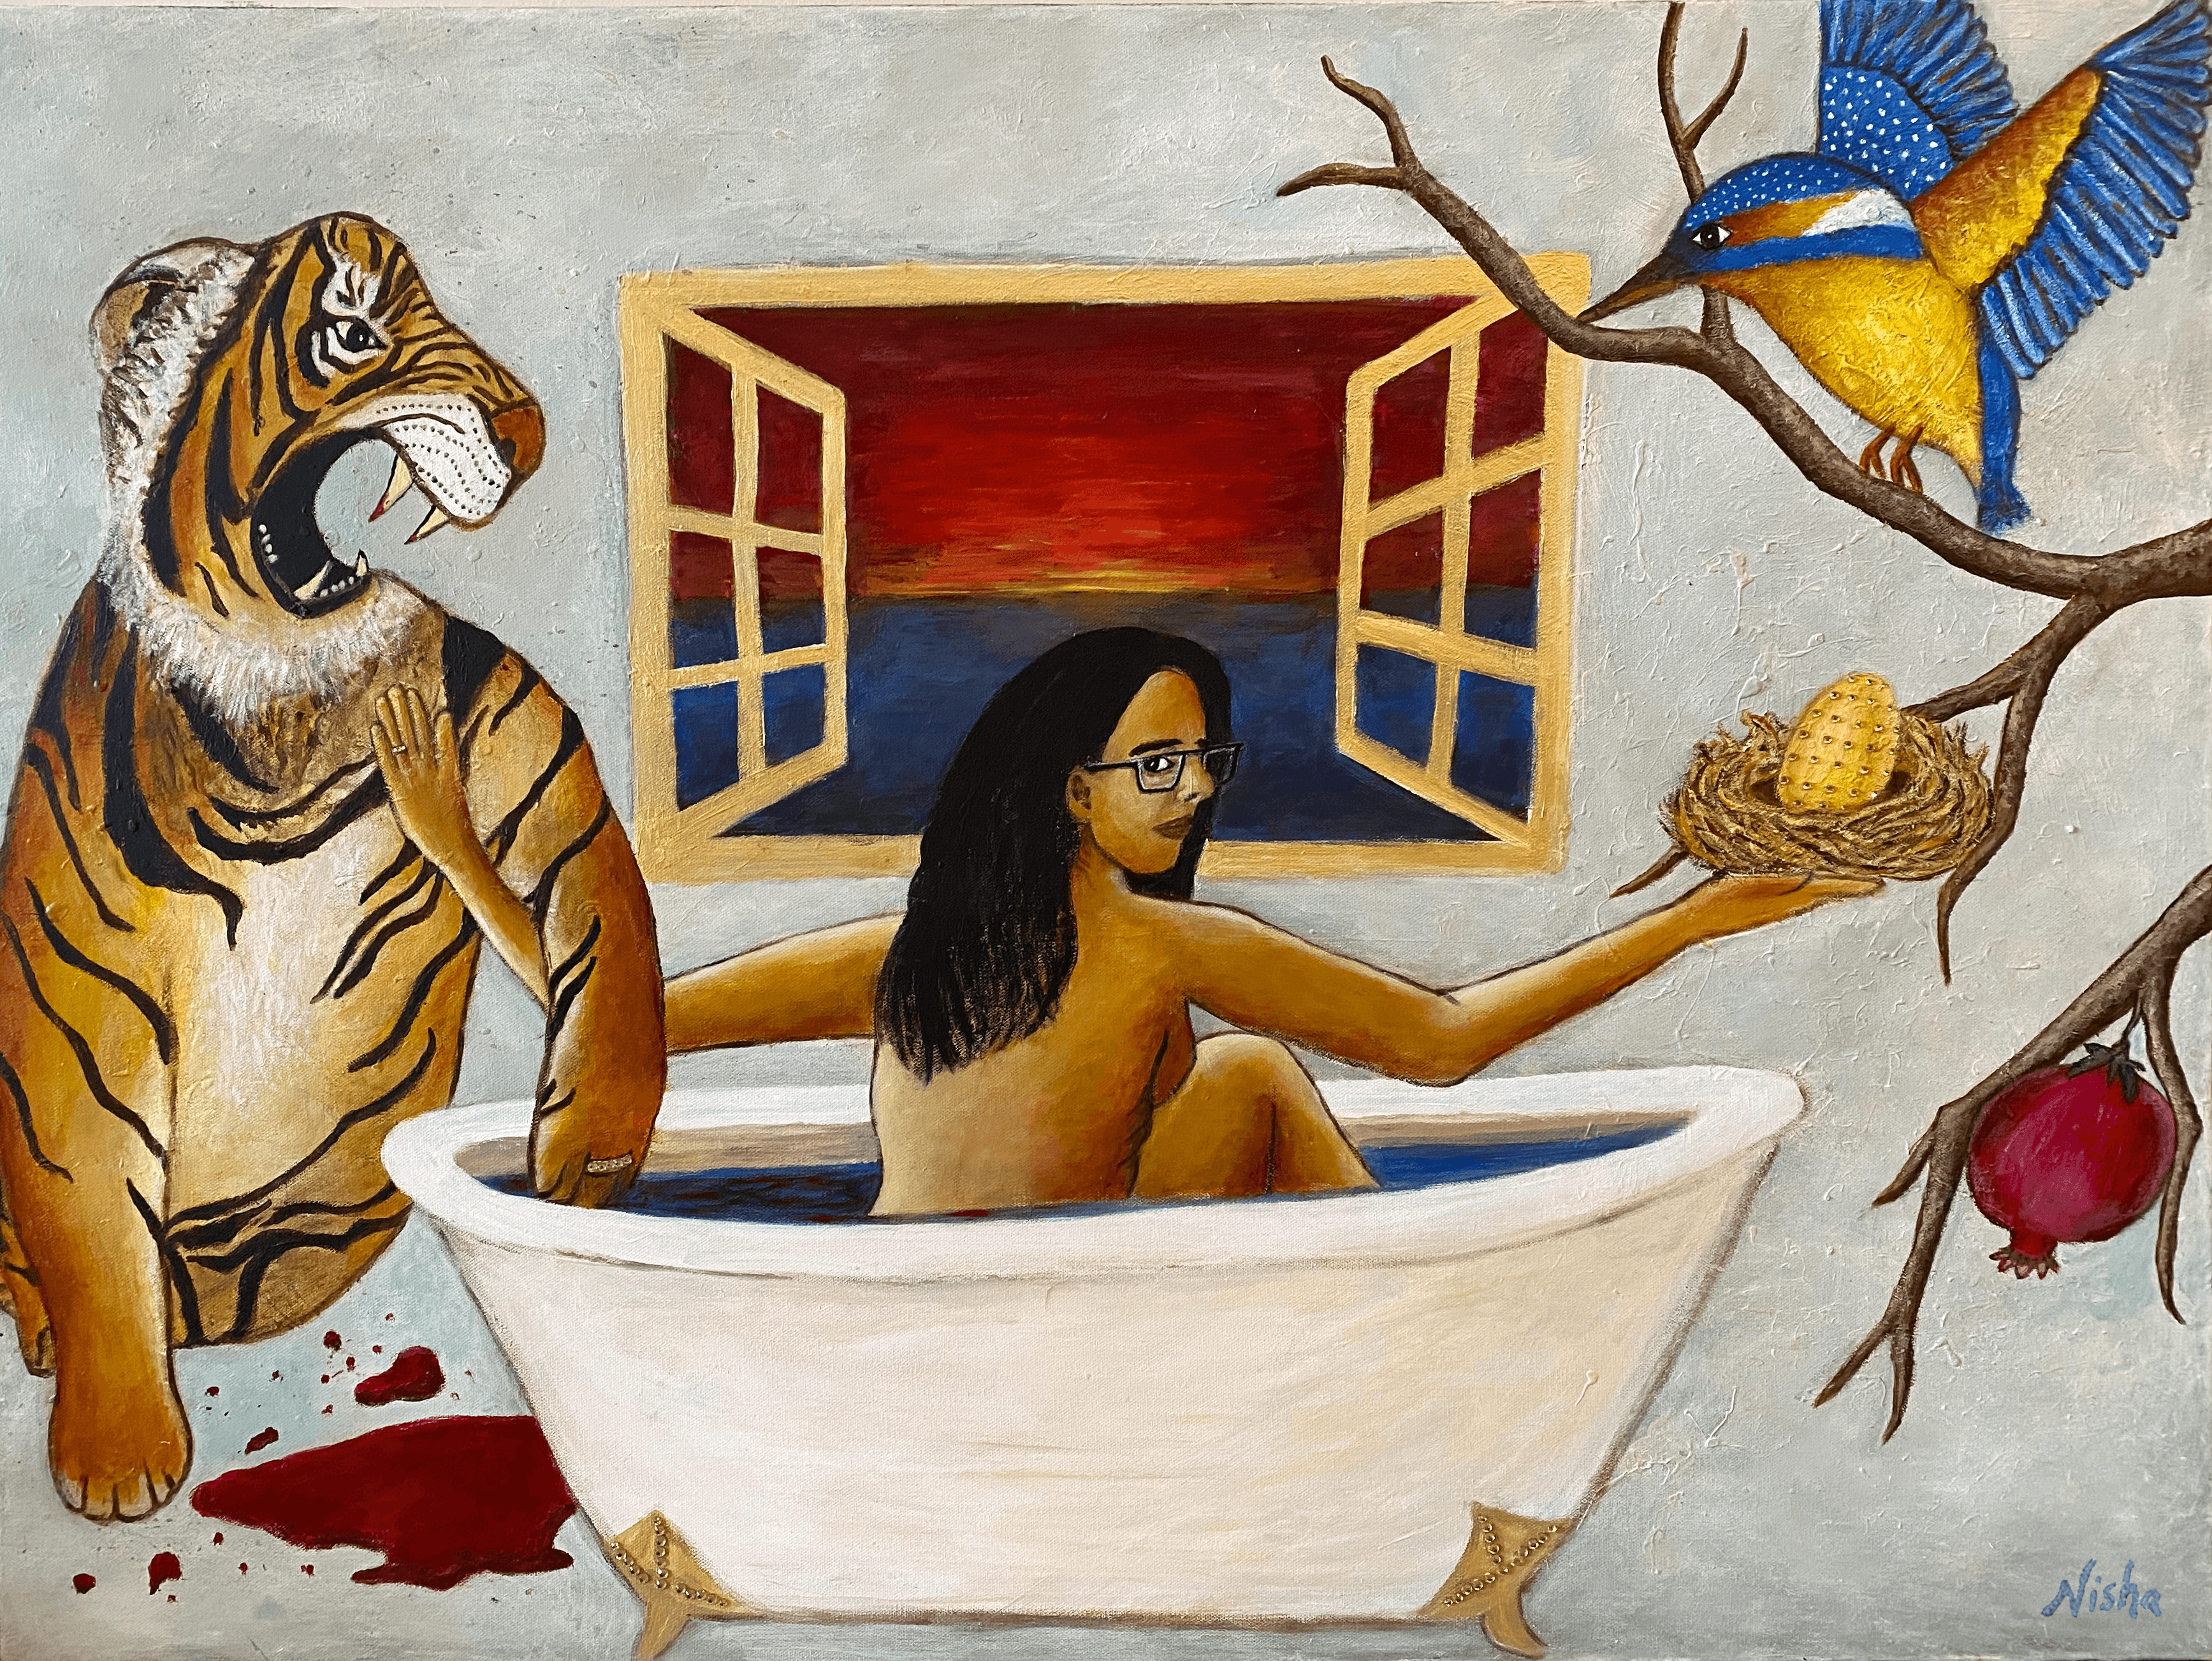 DESI EROS: Surrealist Folk Art about Reclaiming South Asian Erotic Power